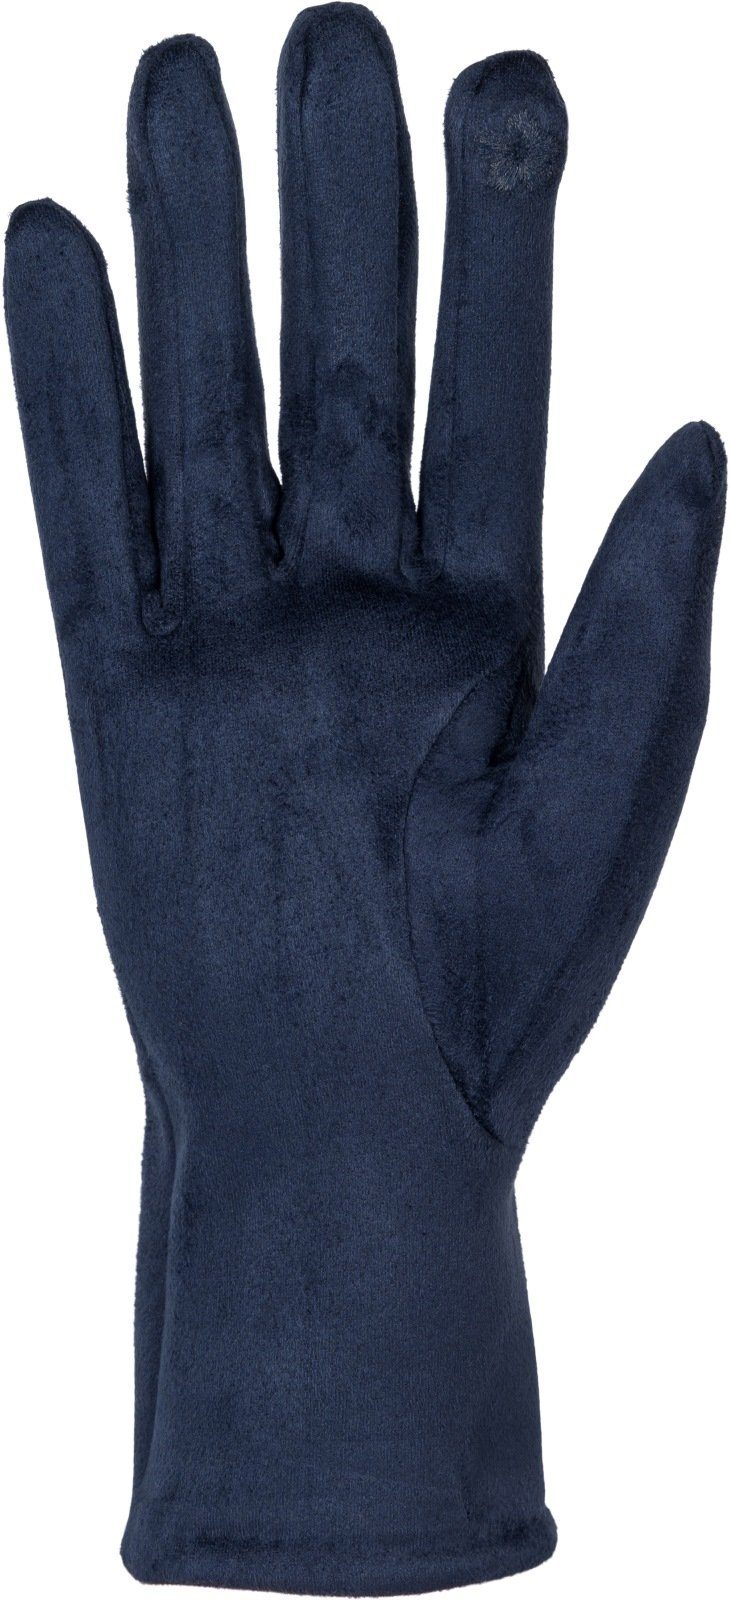 Fleecehandschuhe Ziernähte Einfarbige Dunkelblau Handschuhe Touchscreen styleBREAKER